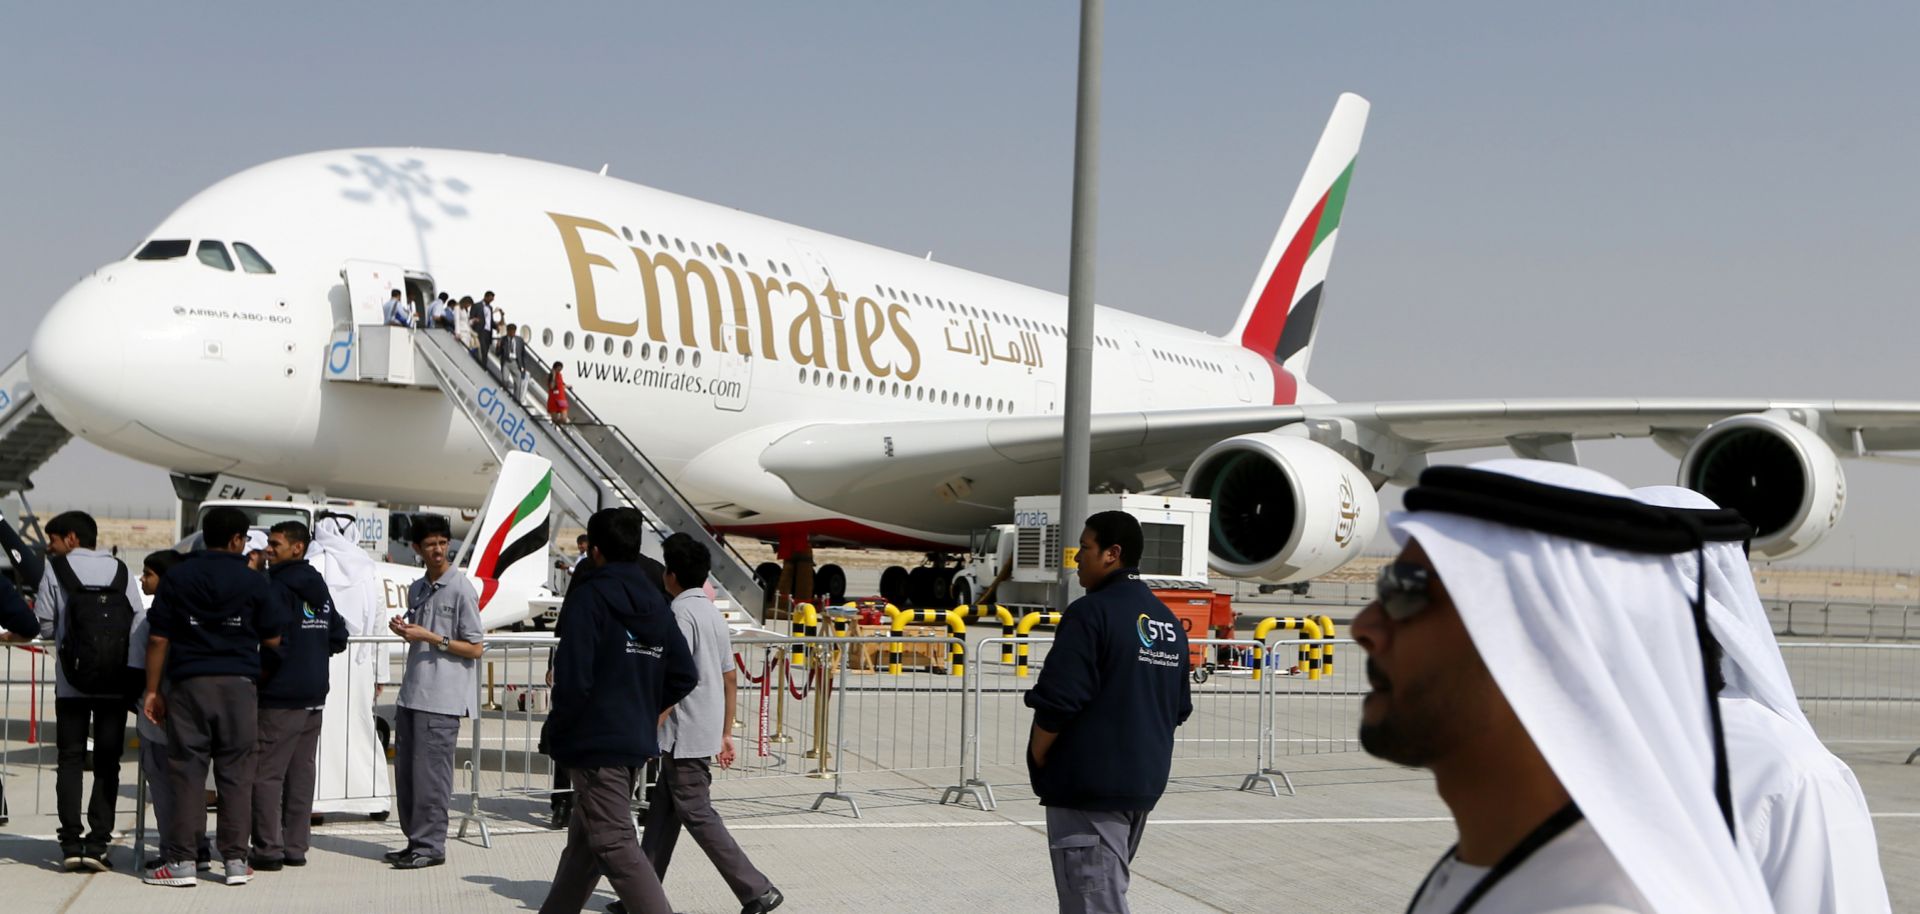 Emirates Airline, Etihad Airways and Qatar Airways have built a winning product. 